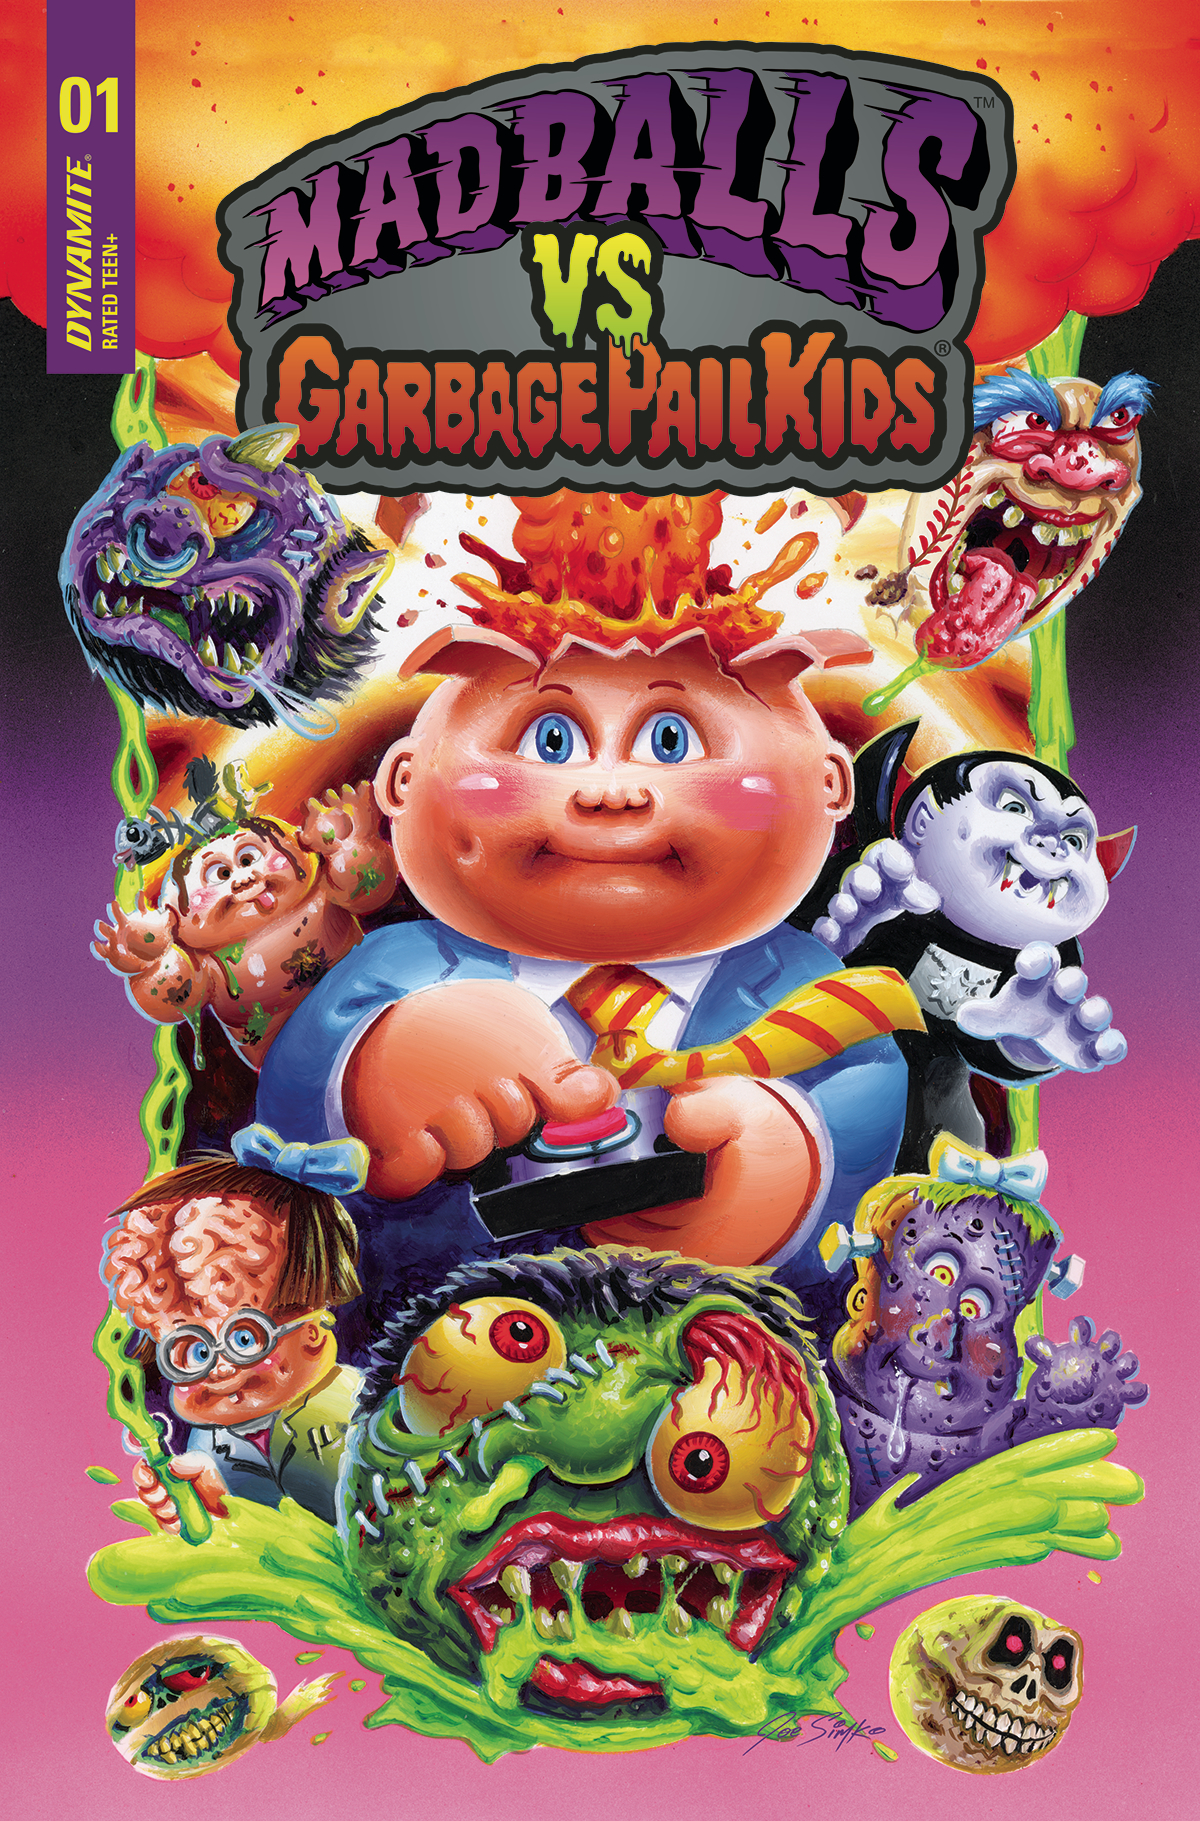 Madballs Vs Garbage Pail Kids #1 Cover A Simko